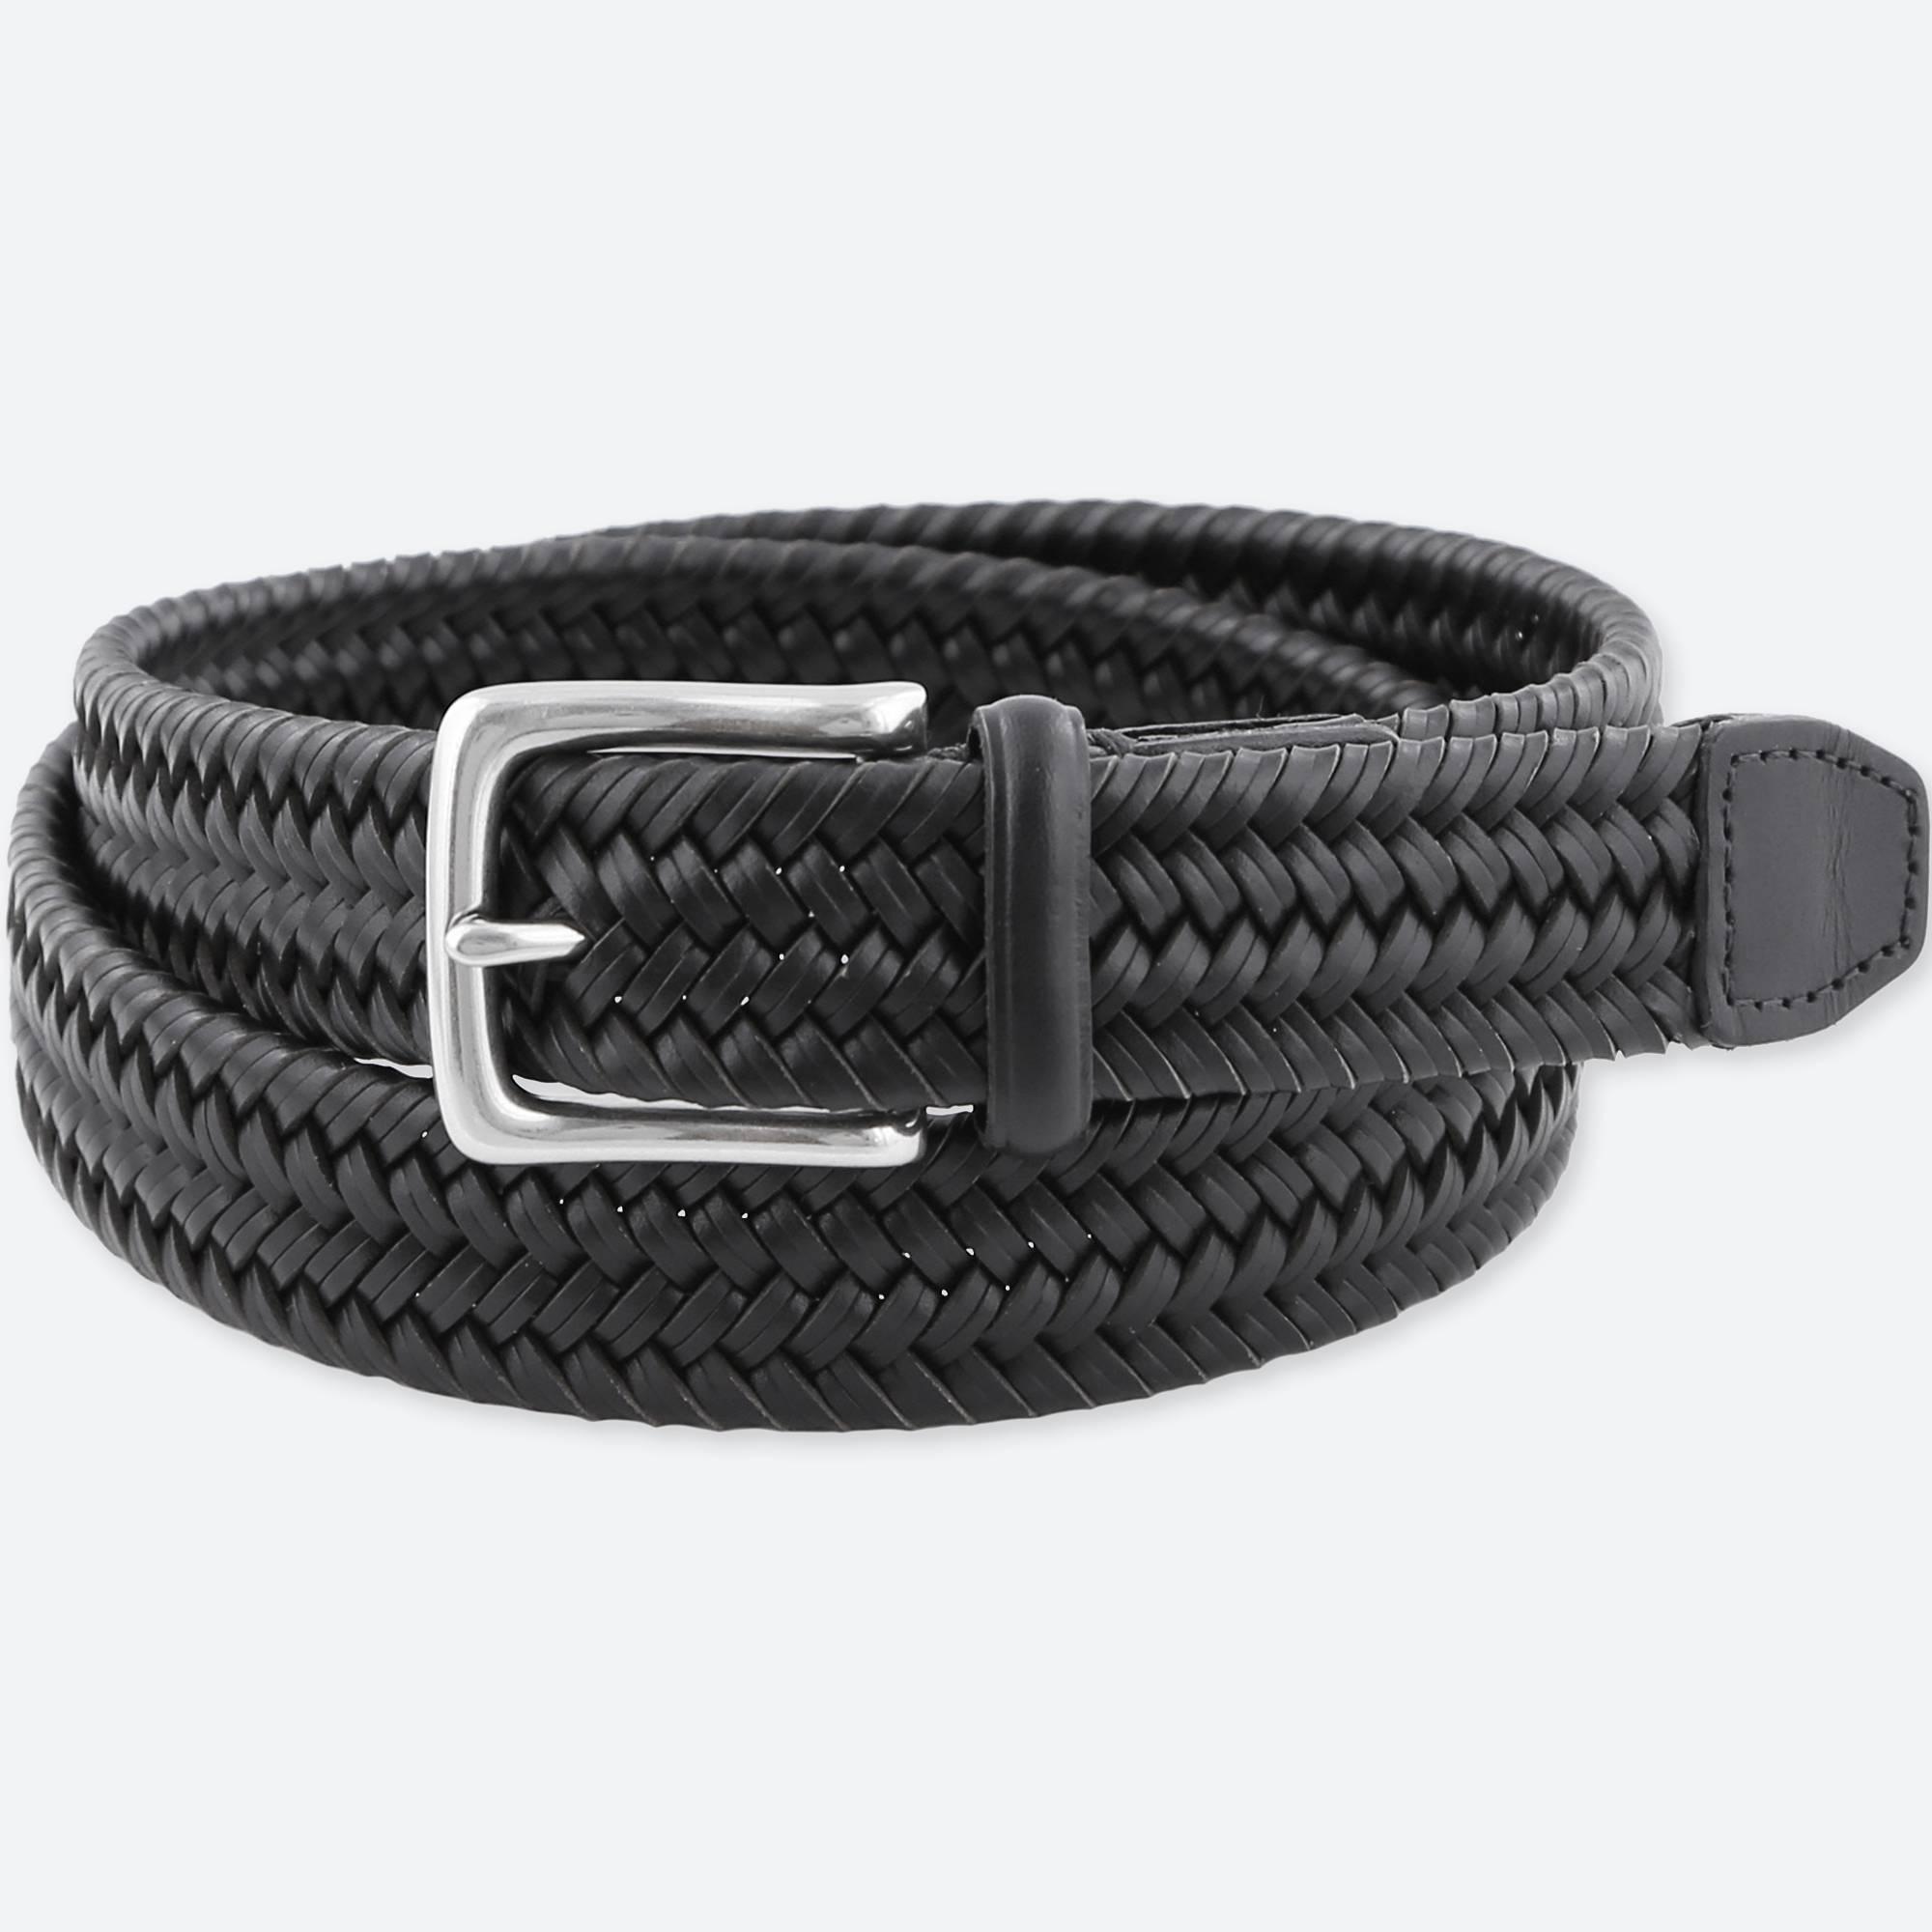 Lyst - Uniqlo Men Leather Stretch Mesh Belt in Black for Men